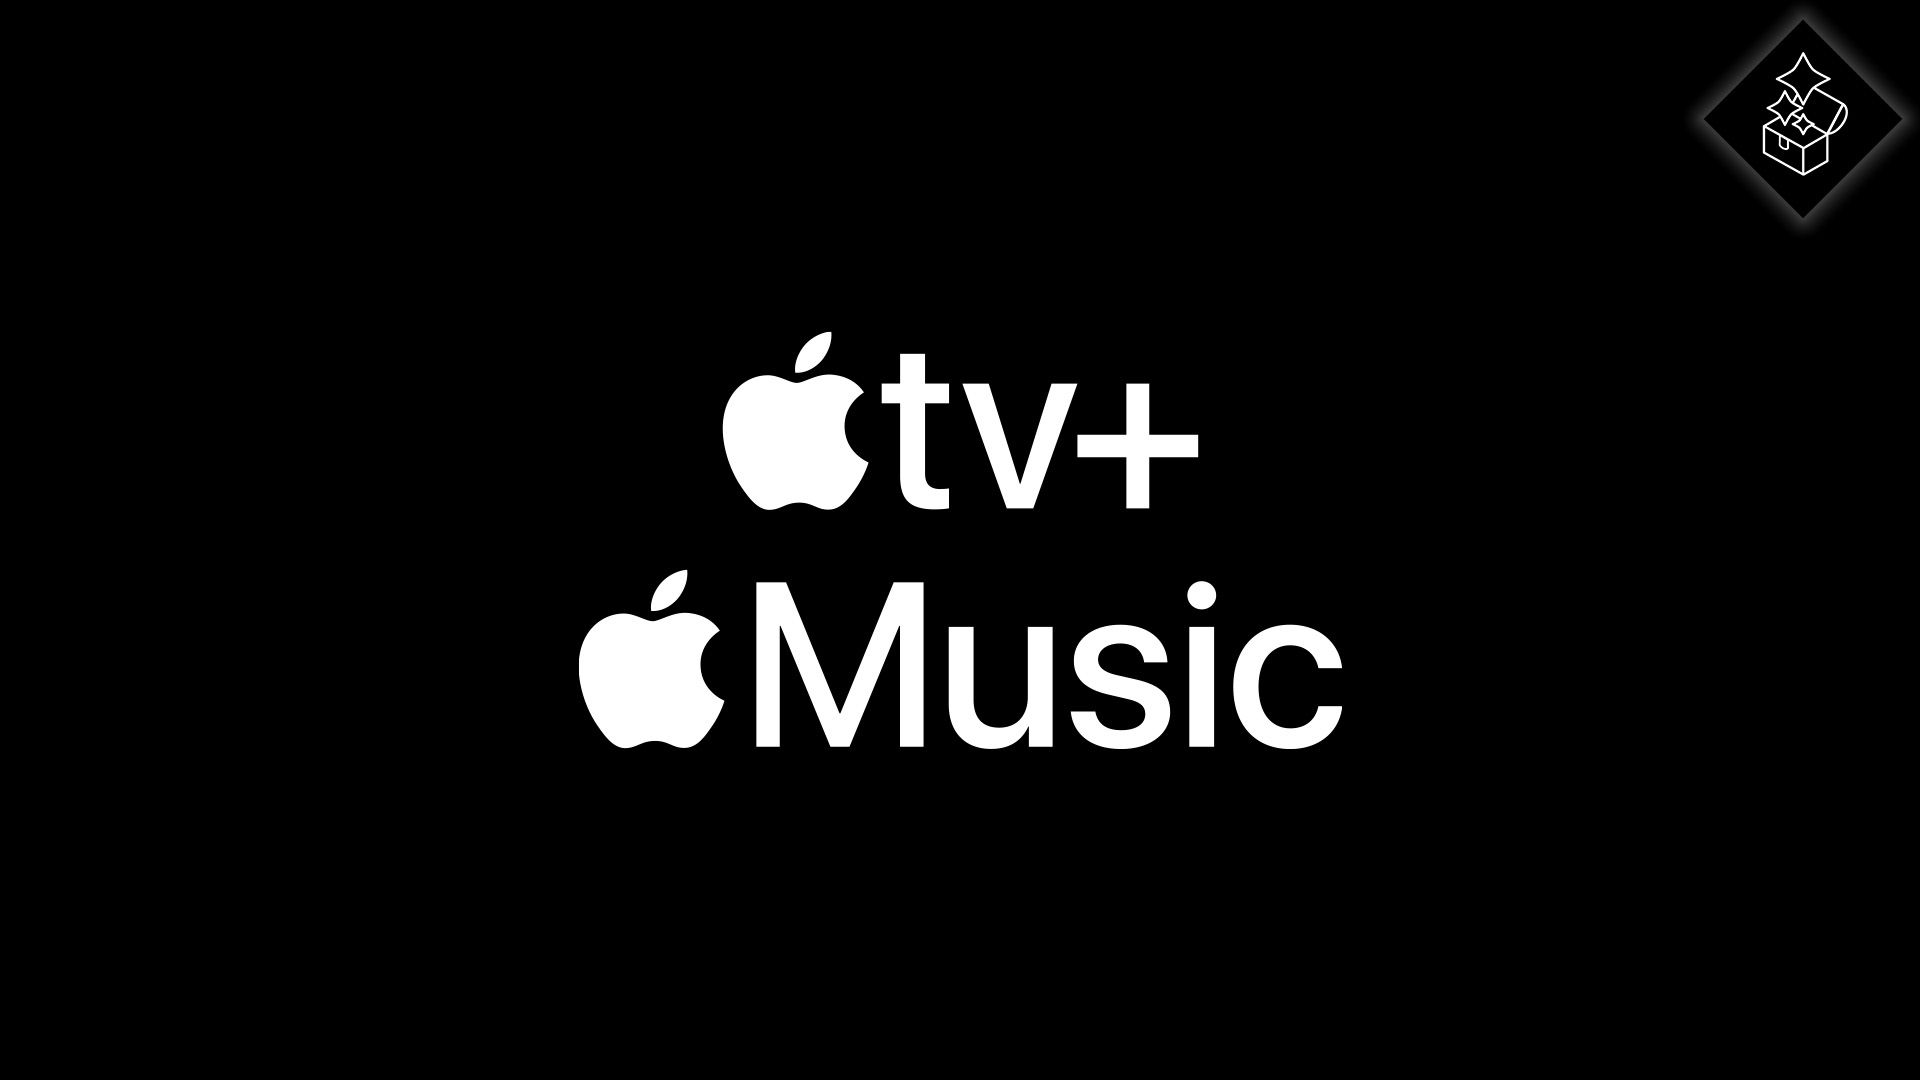 Sony дарит владельцам PlayStation подписку на Apple TV+ и Apple Music